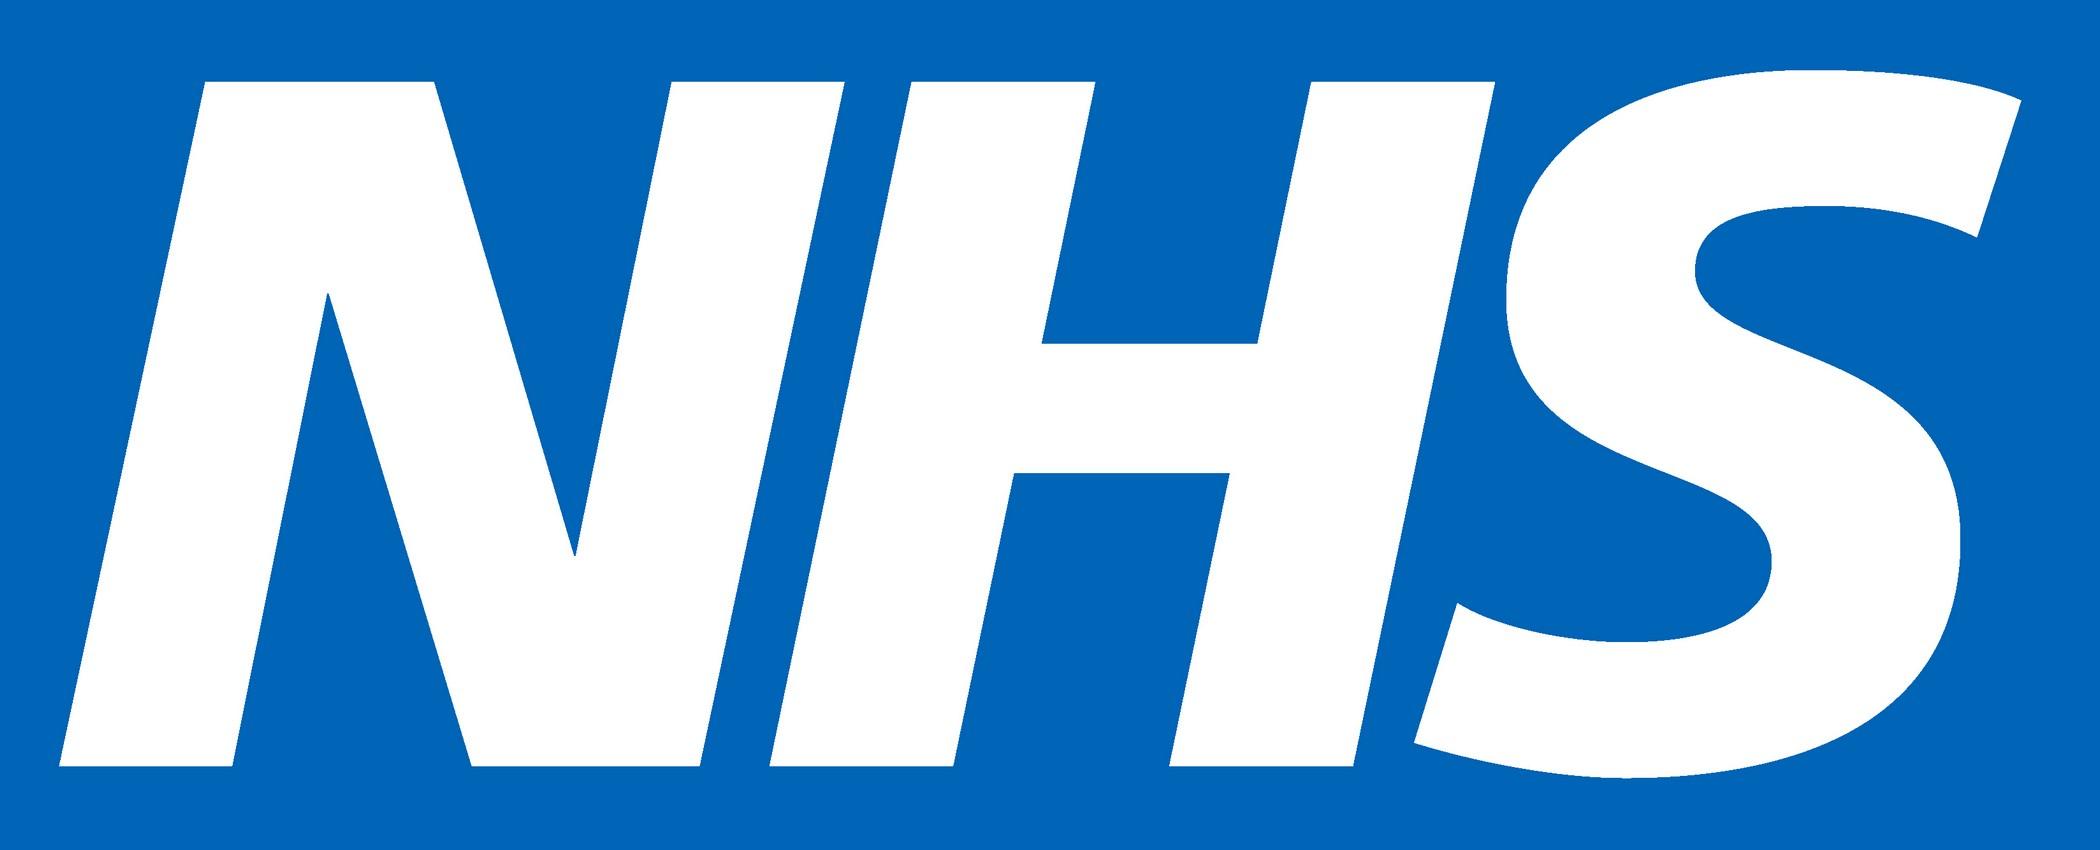 Health Service Logo - National Health Service Nhs Logo